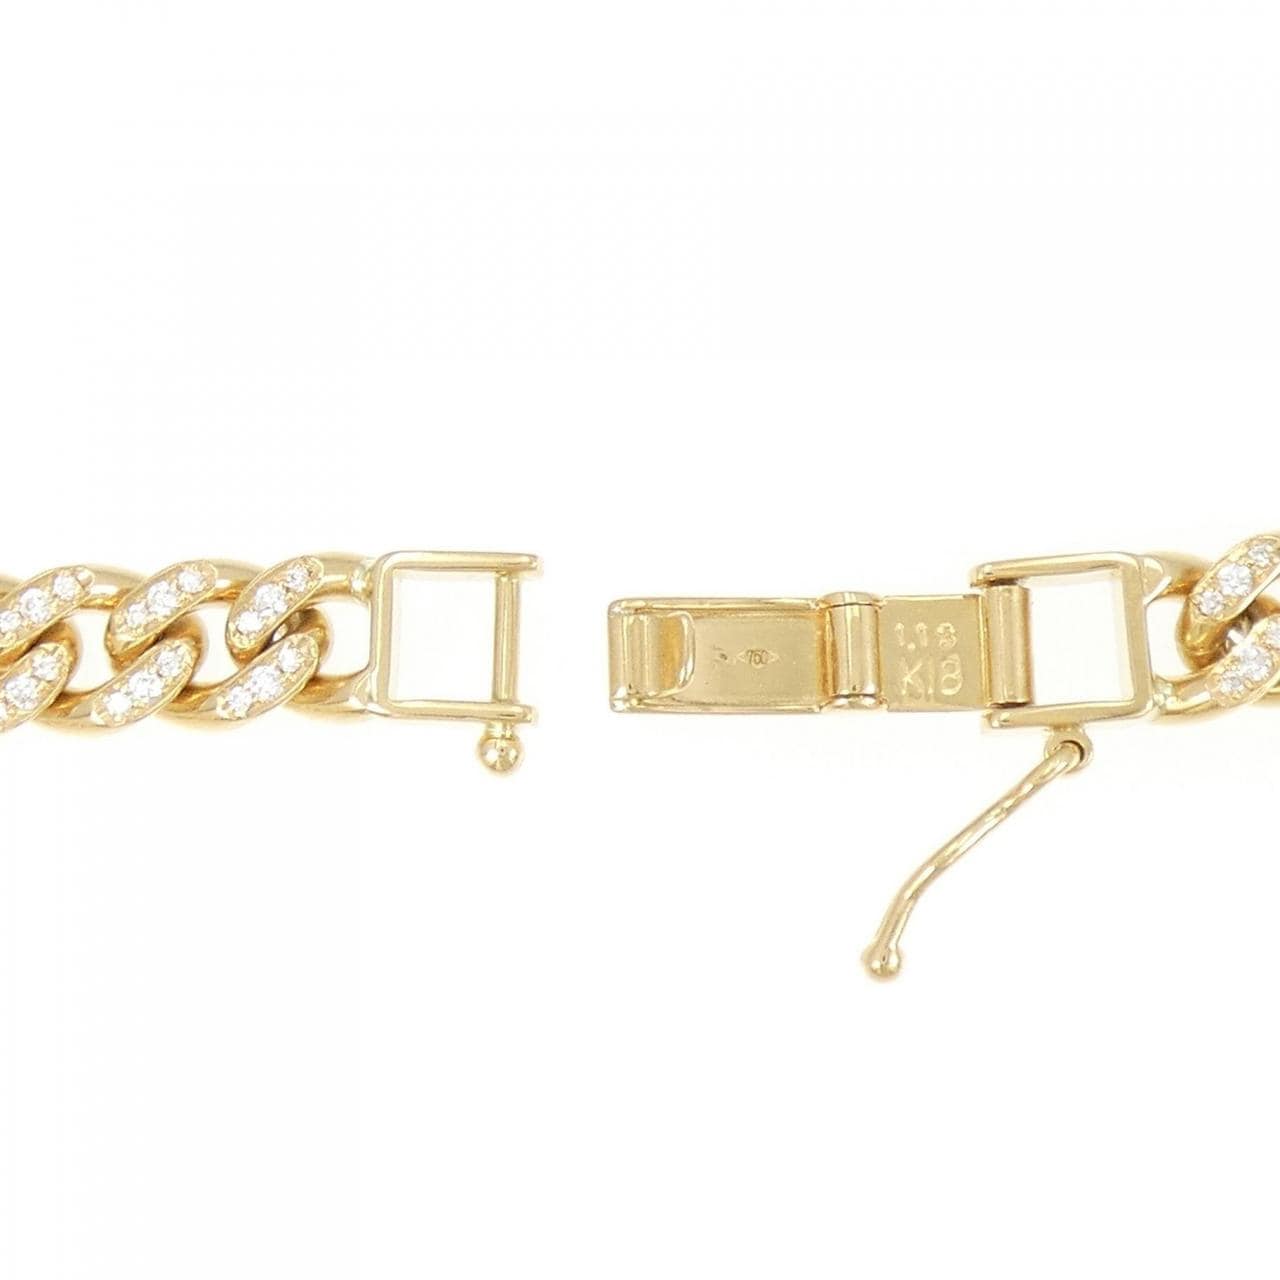 [BRAND NEW] K18YG Diamond Kihei Bracelet 1.13CT 20cm